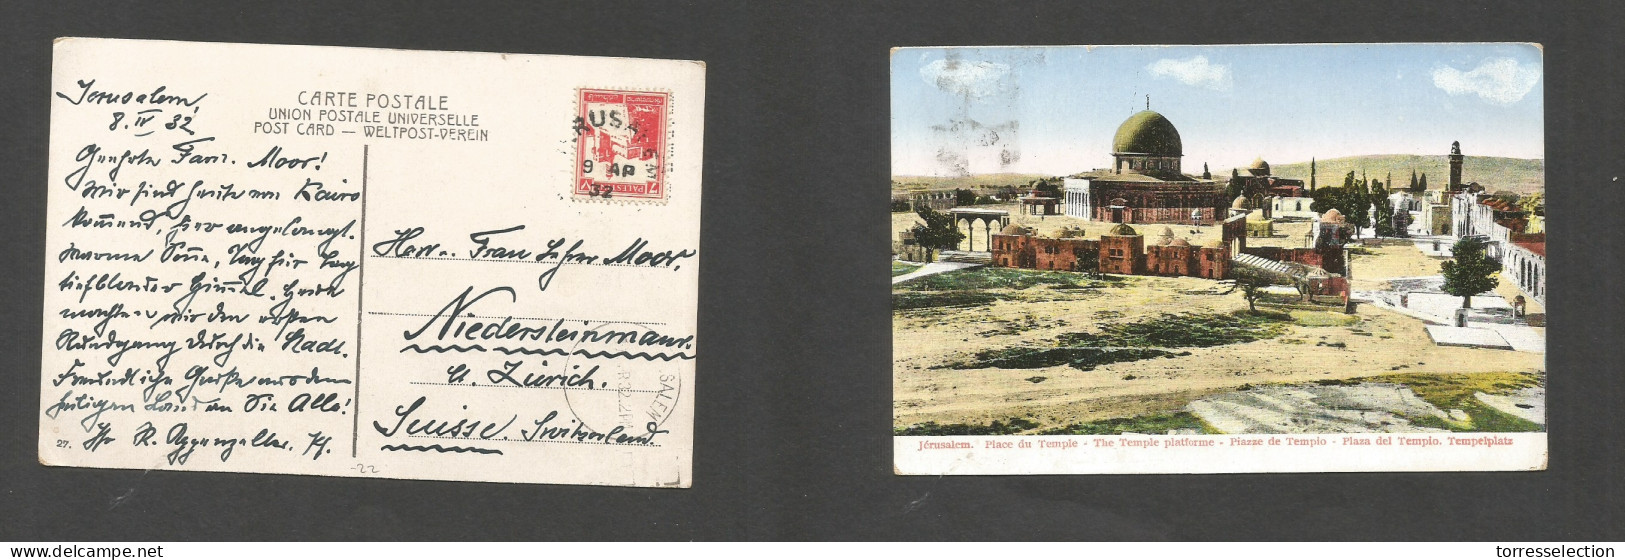 PALESTINE. 1932 (8 Apr) Jerusalem - Switzerland, Niedersleinmans Via Salem. Fkd Ppc. Fine. SALE. - Palestina